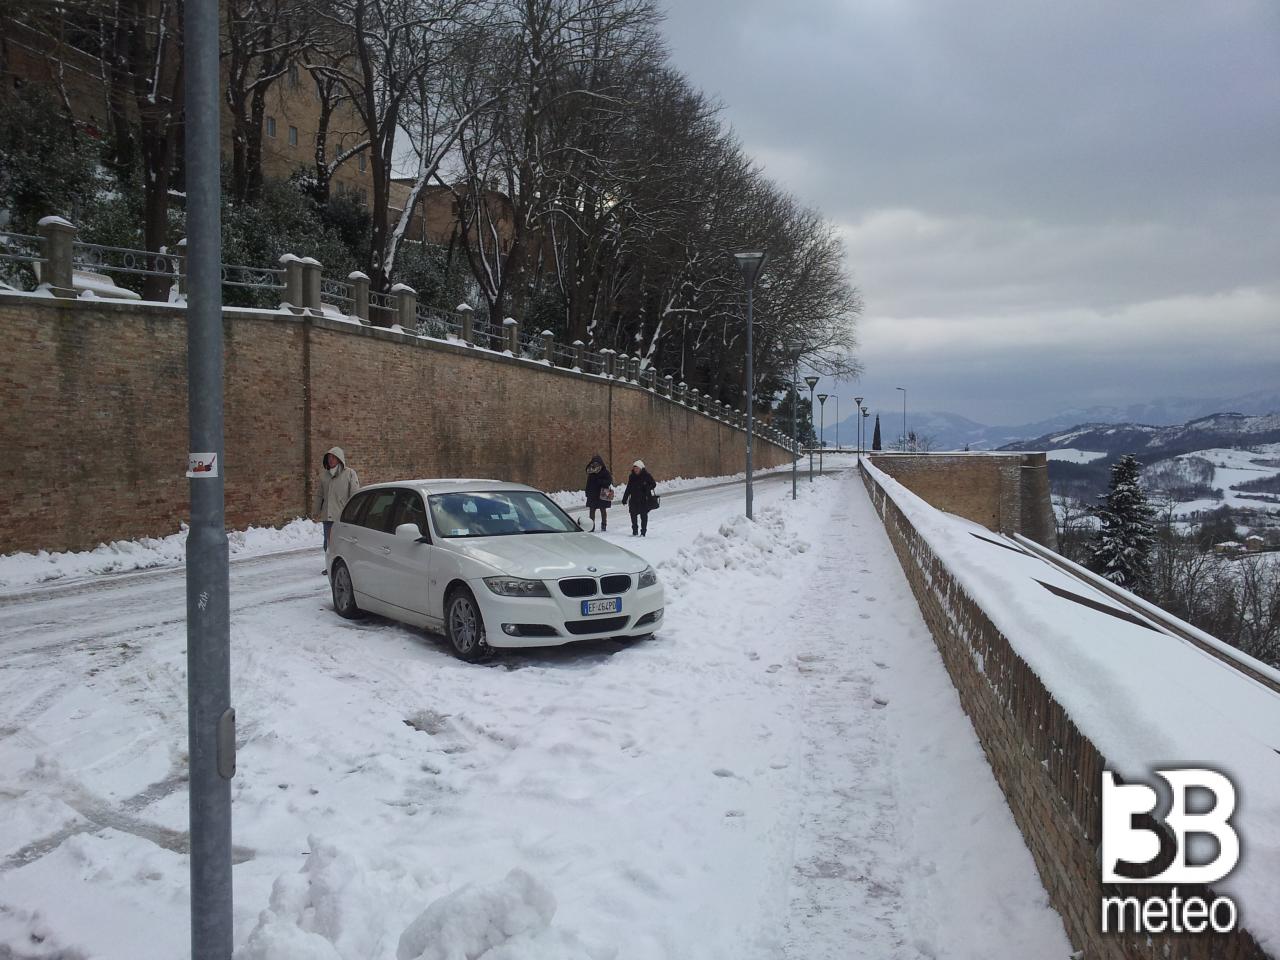 Meteo Urbino: bel tempo lunedì, temporali martedì, qualche ... - 3bmeteo